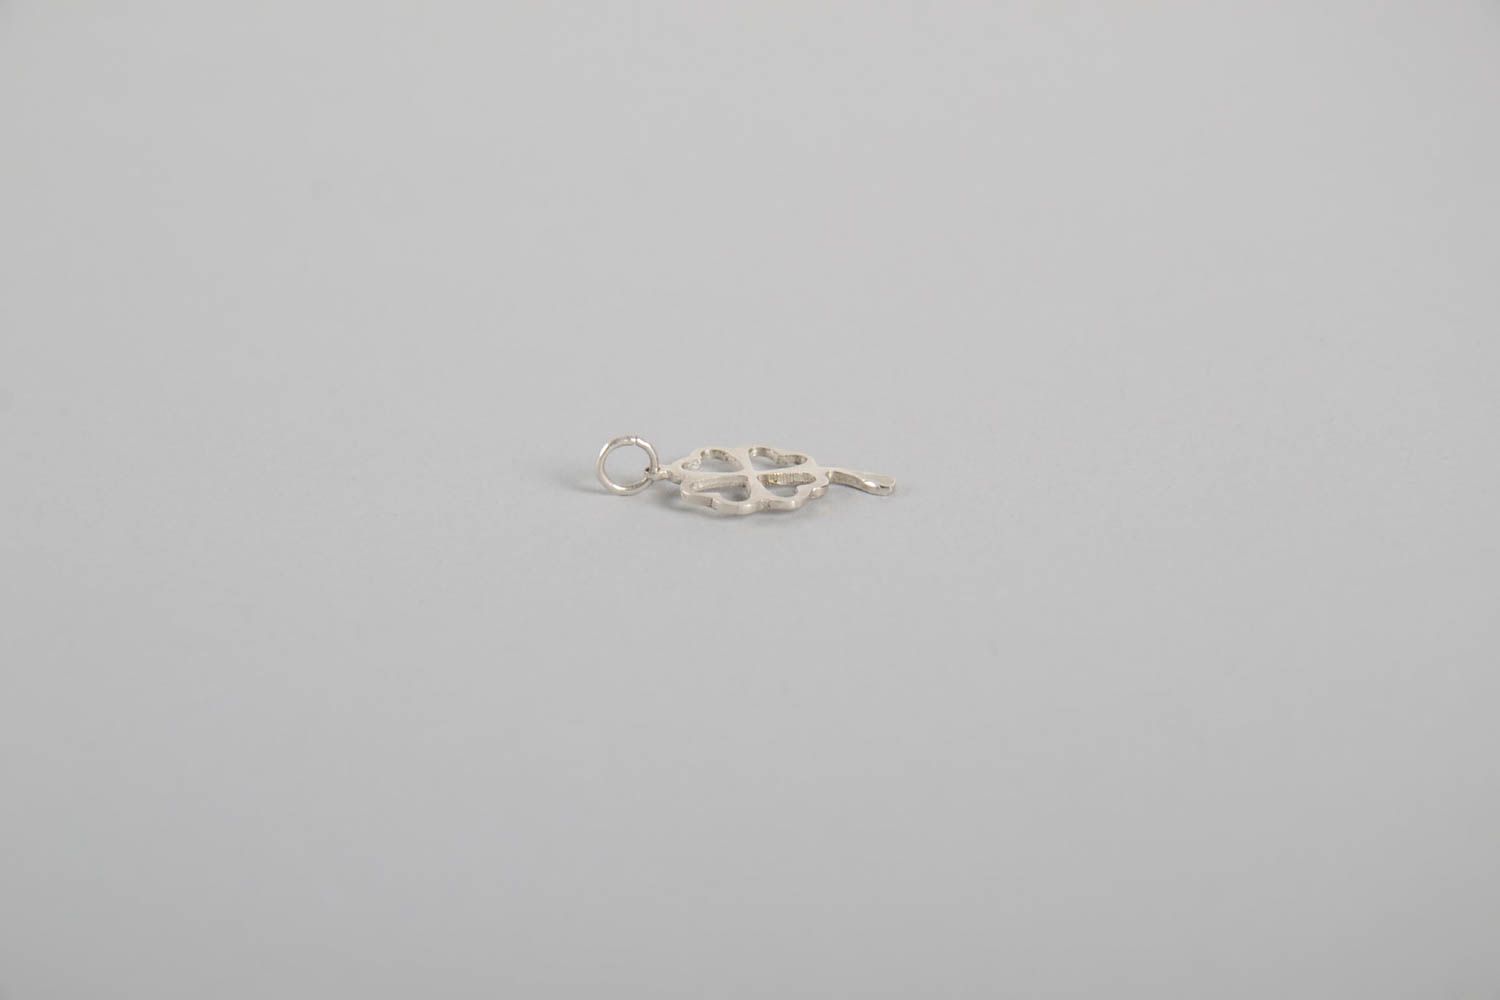 Handmade pendant designer accessory gift ideas silver jewelry silver pendant photo 5